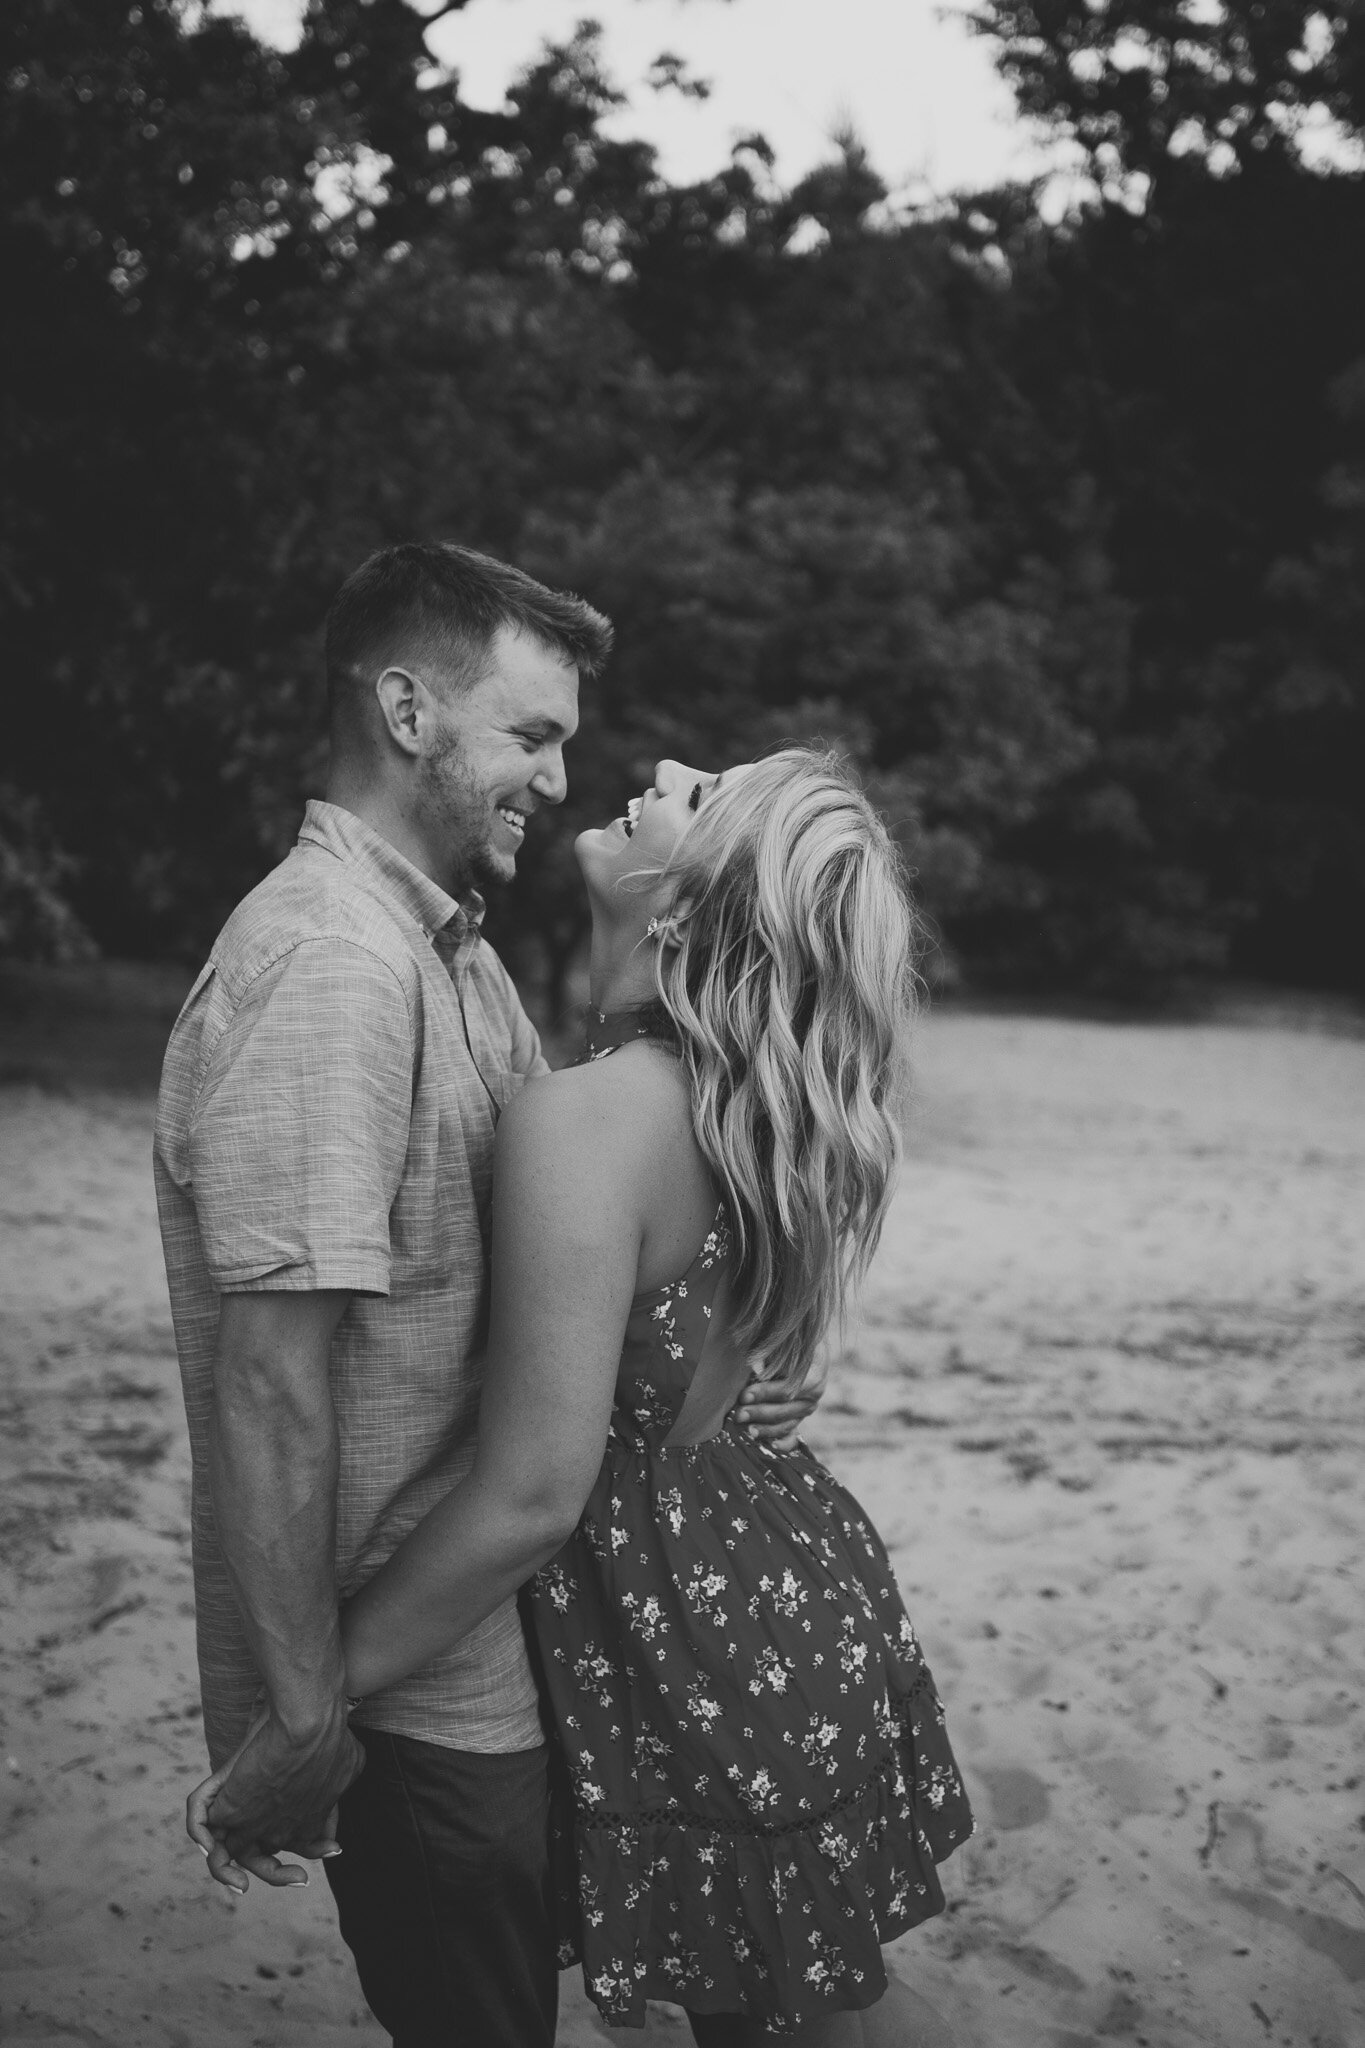 Chris and Kaleen Summer 2020 - Provin Trails - Grand Rapids Wedding Photographer - West Michigan Wedding Photographer - J Darling Photo 019.jpg